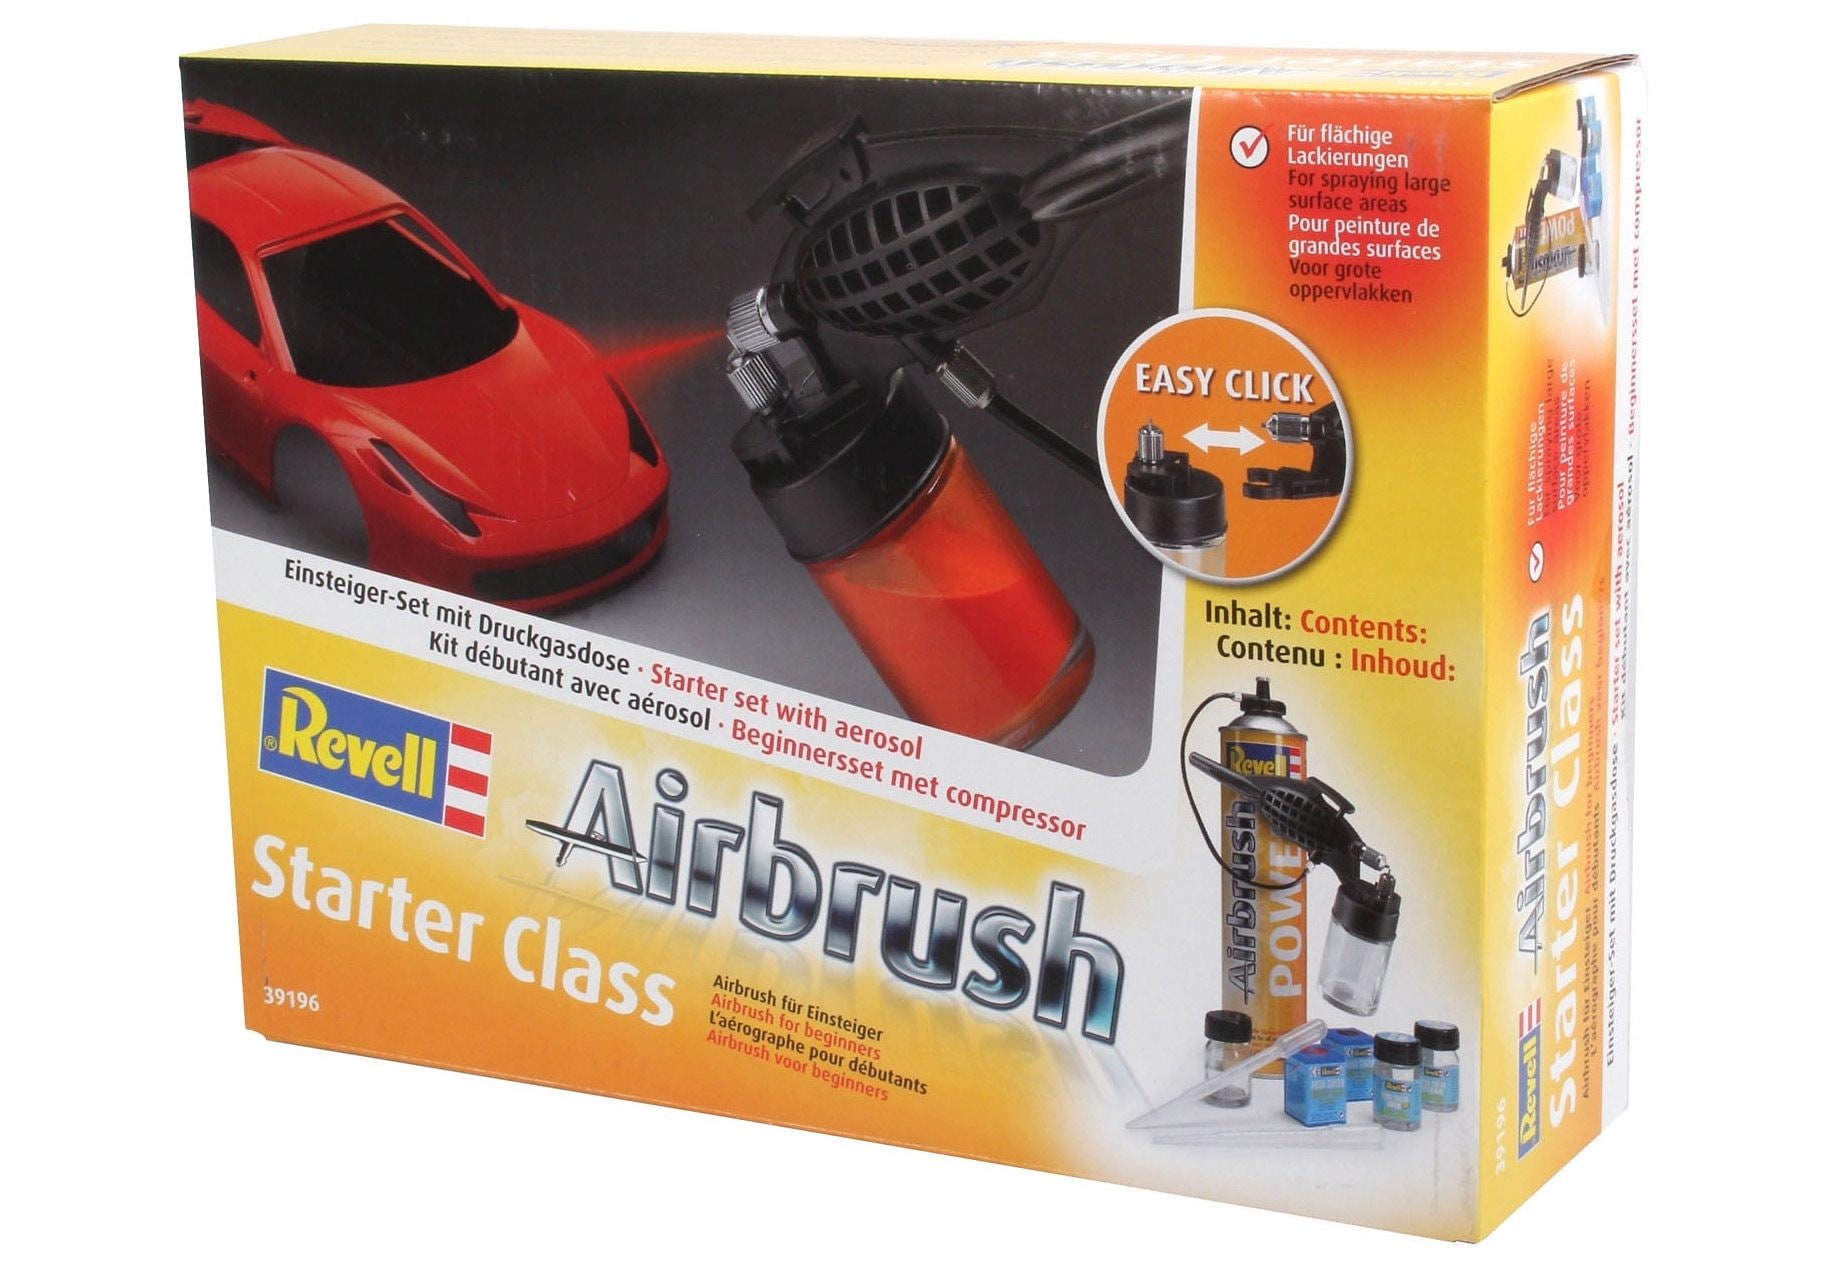 Revell® Farbsprühgerät »Airbrush - Starter class« jetzt im %Sale